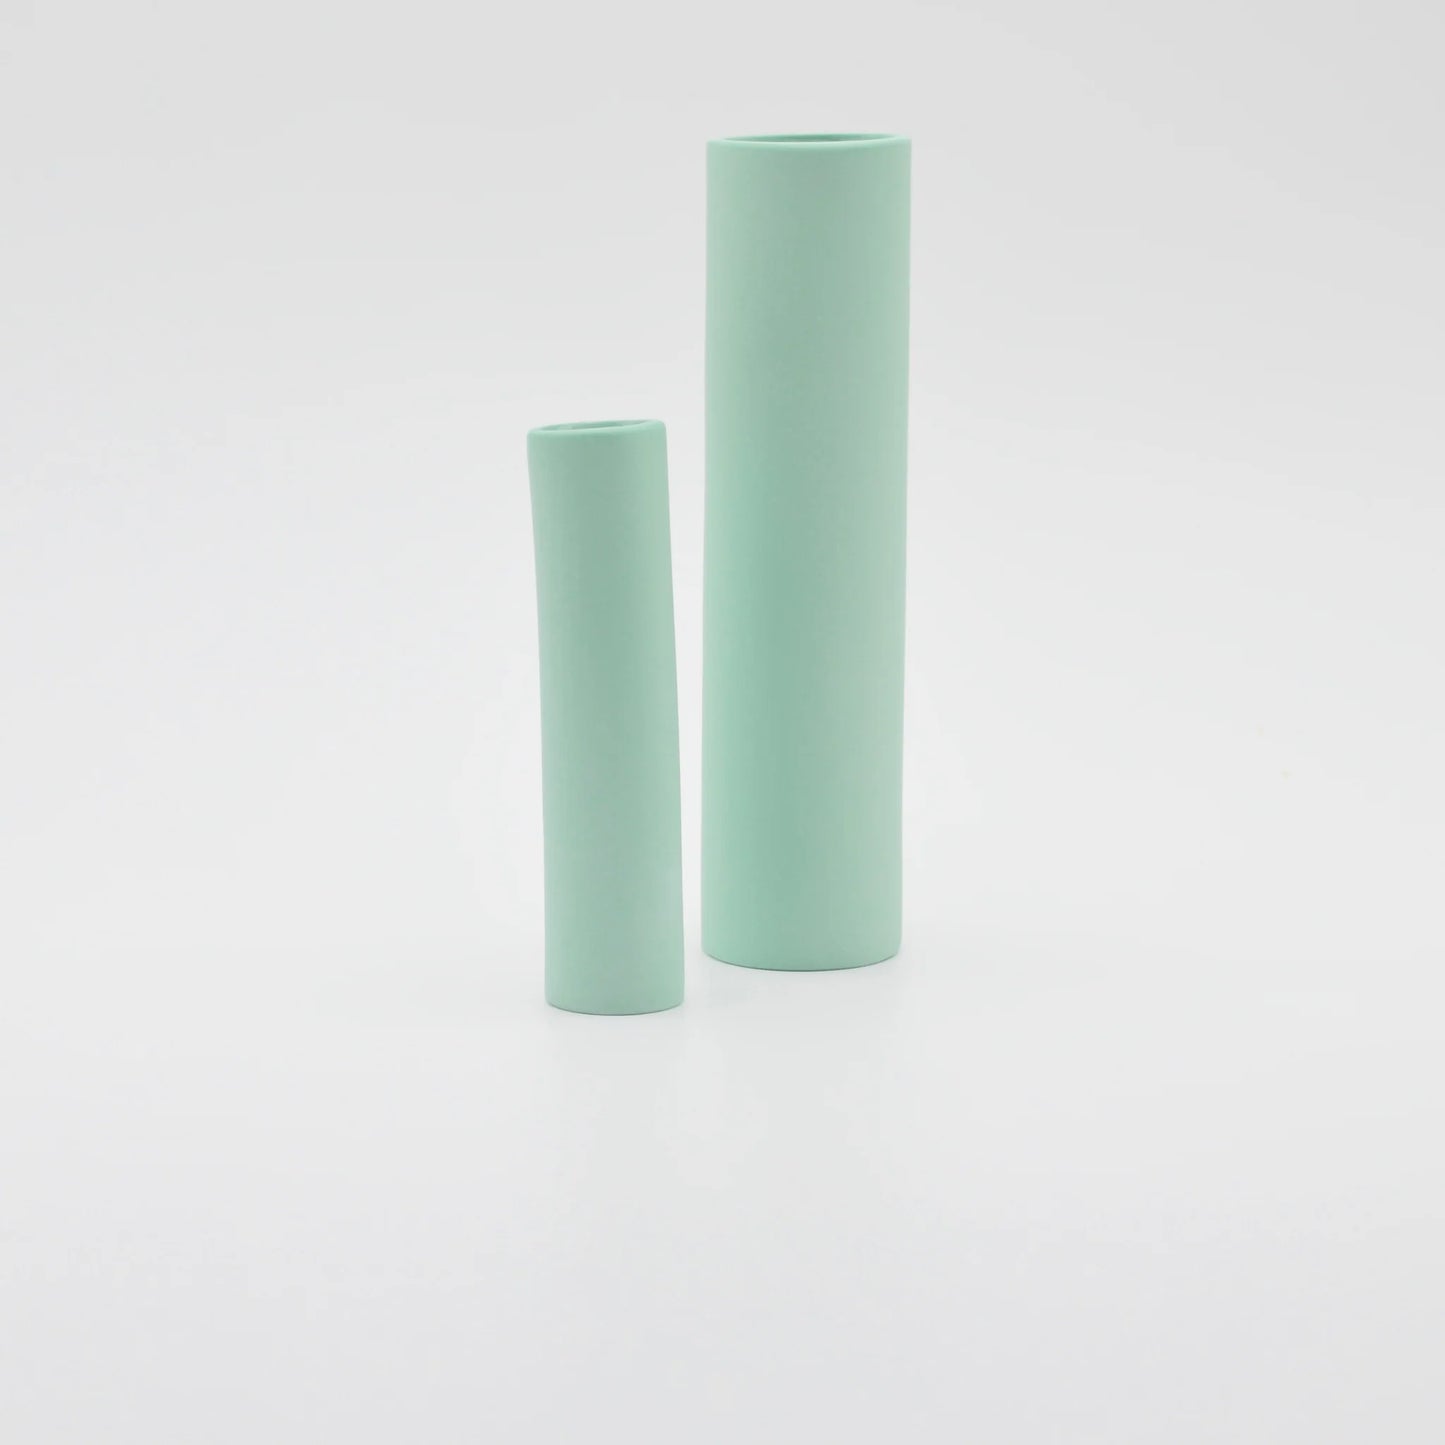 Medium Stem Vase in Green